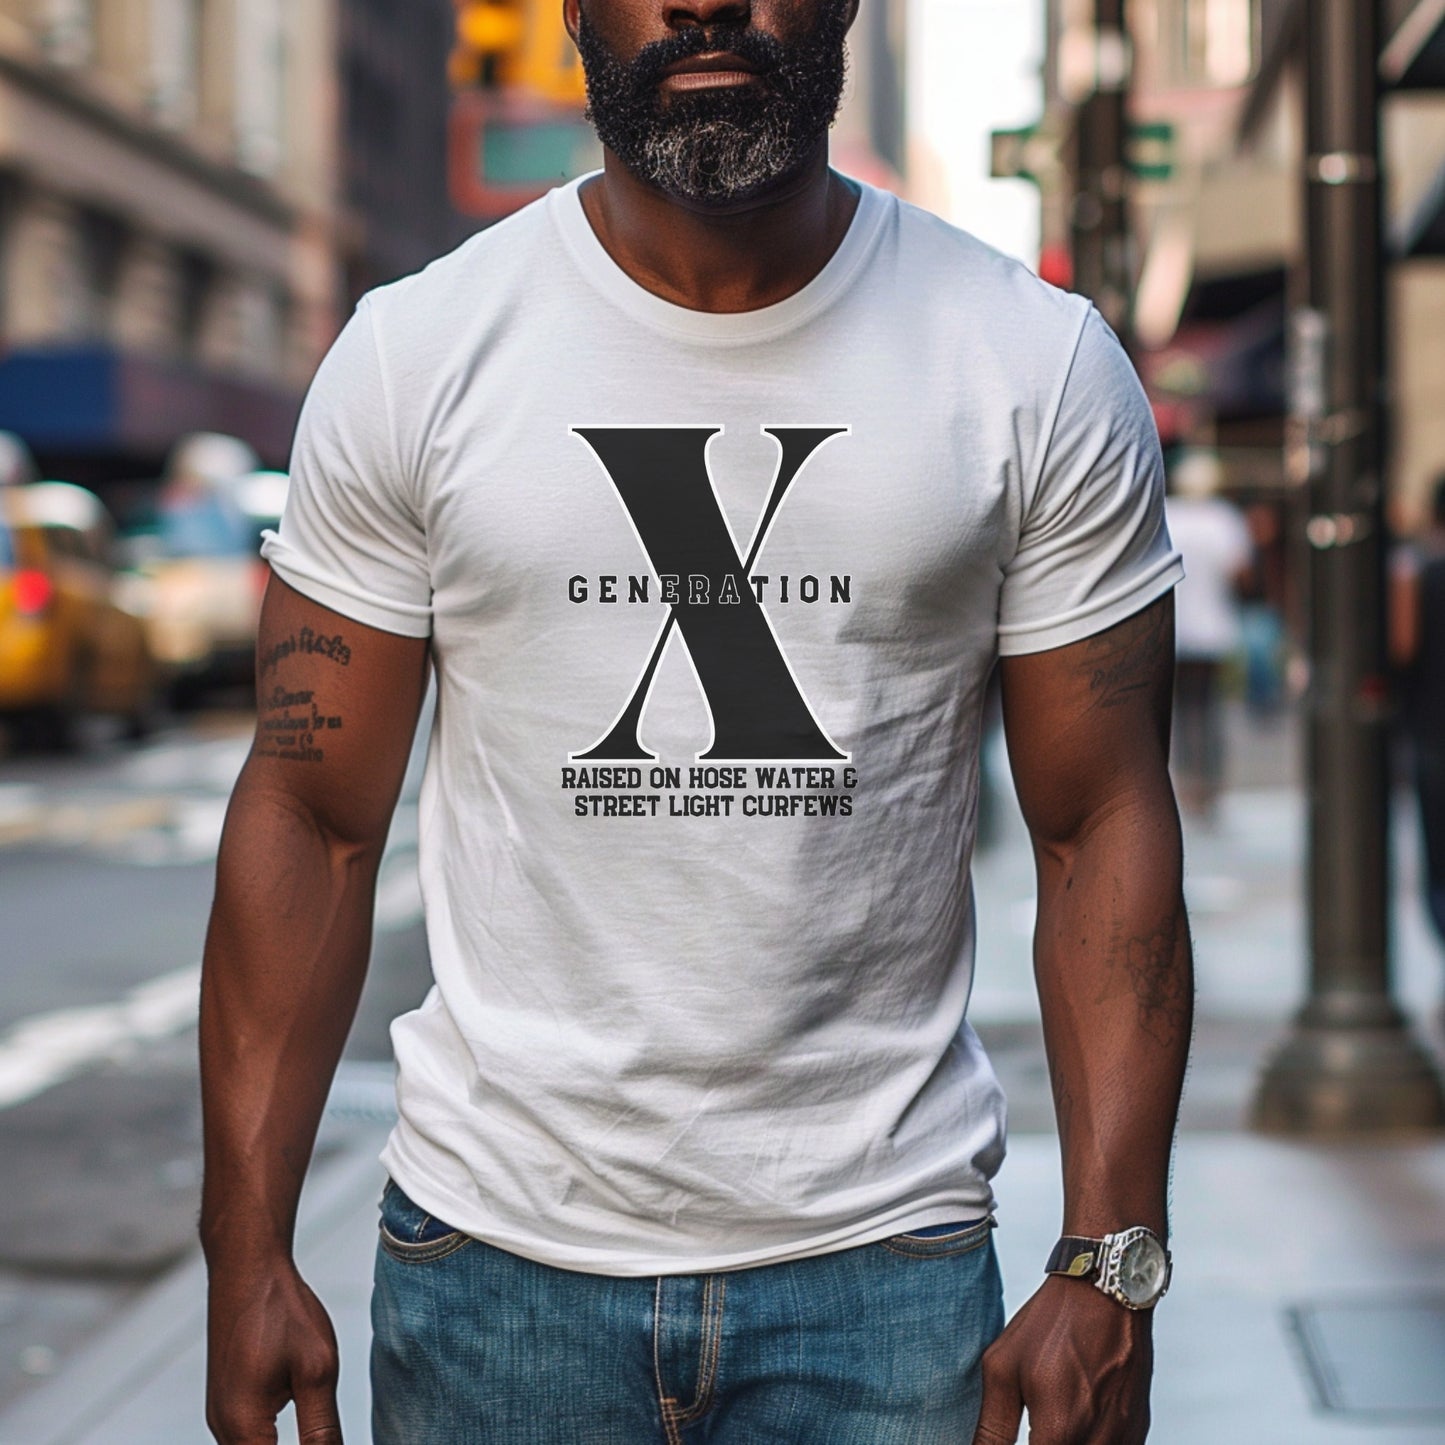 "Generation X T-shirt"